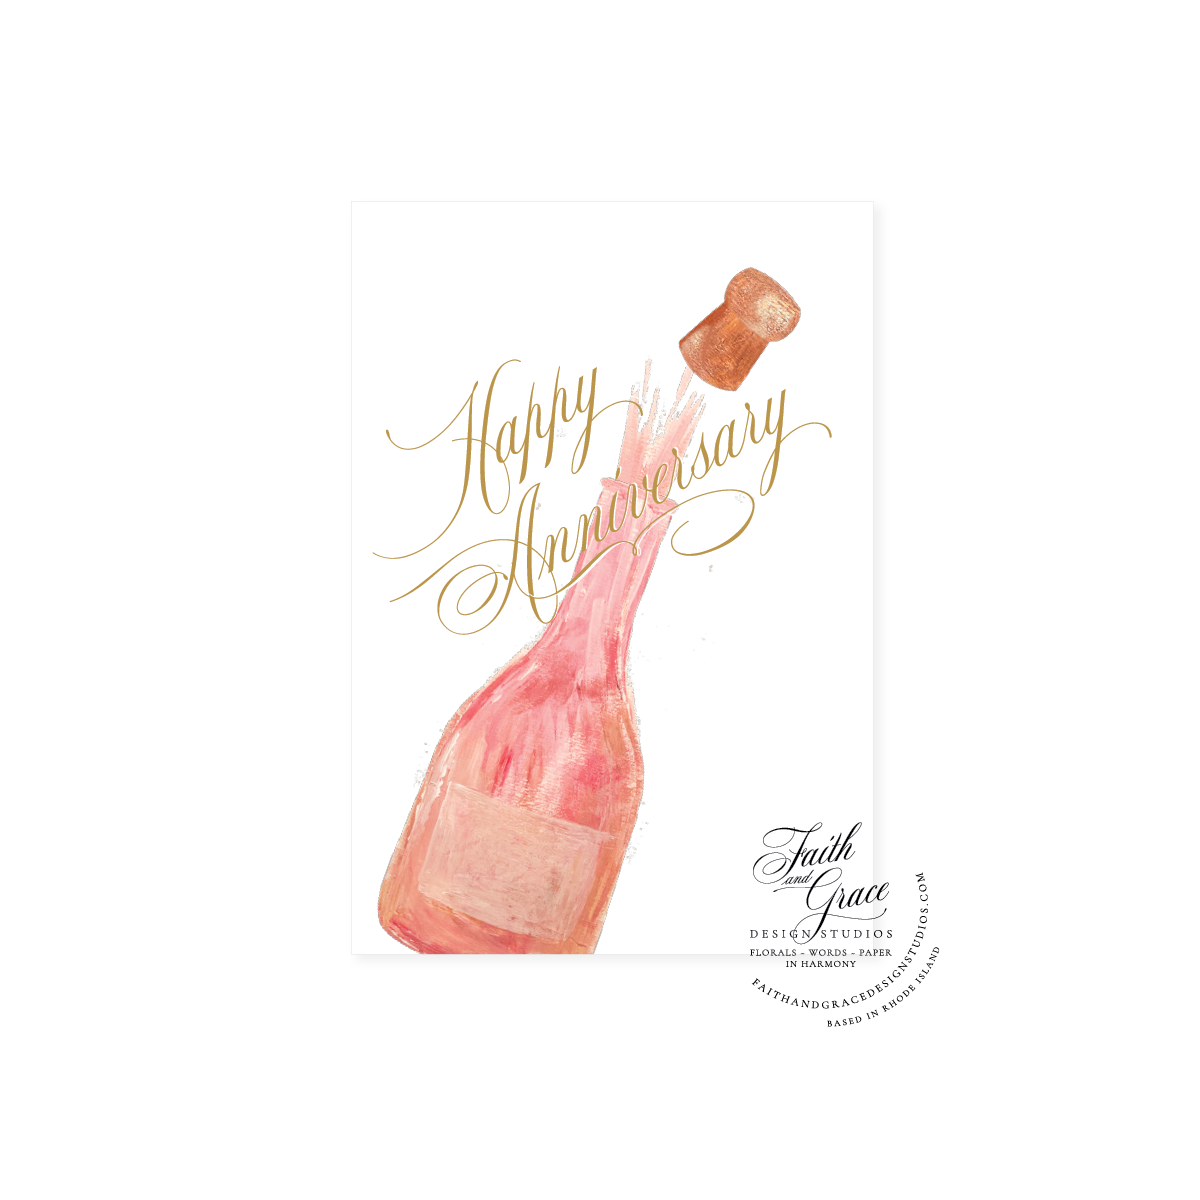 Happy Anniversary on pink champagne botttle